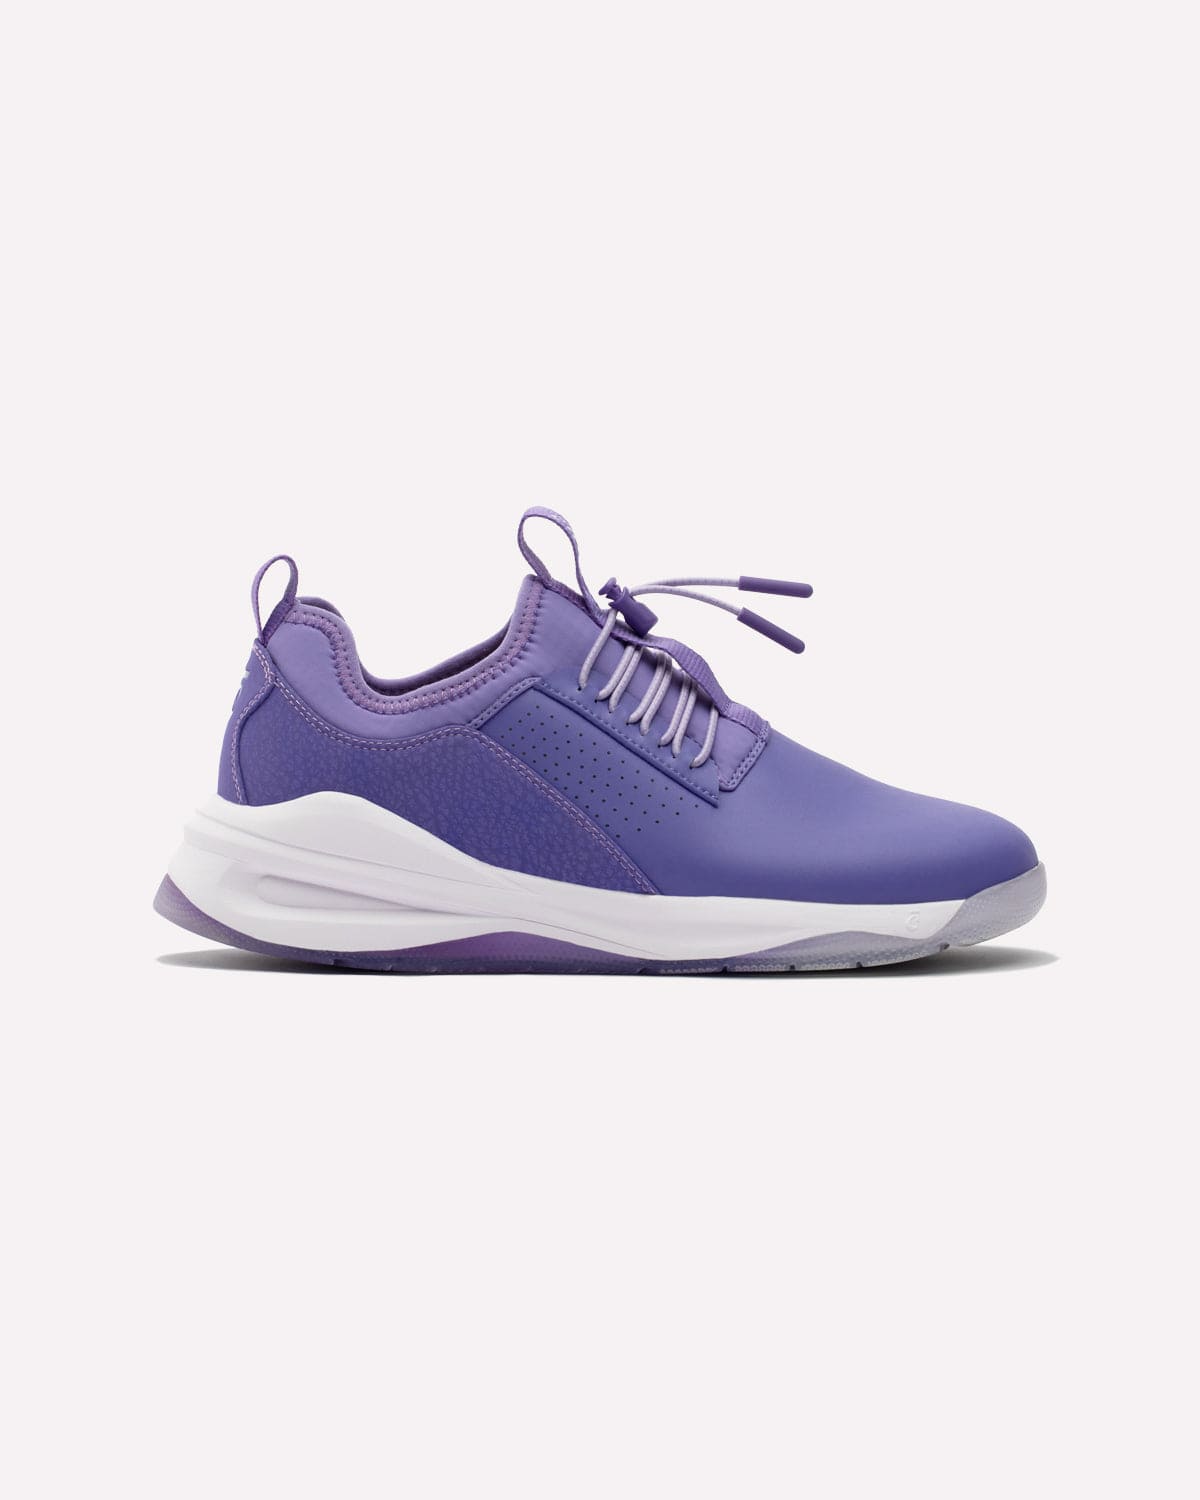 Women's Purple Sneakers for Healthcare Workers | Clove